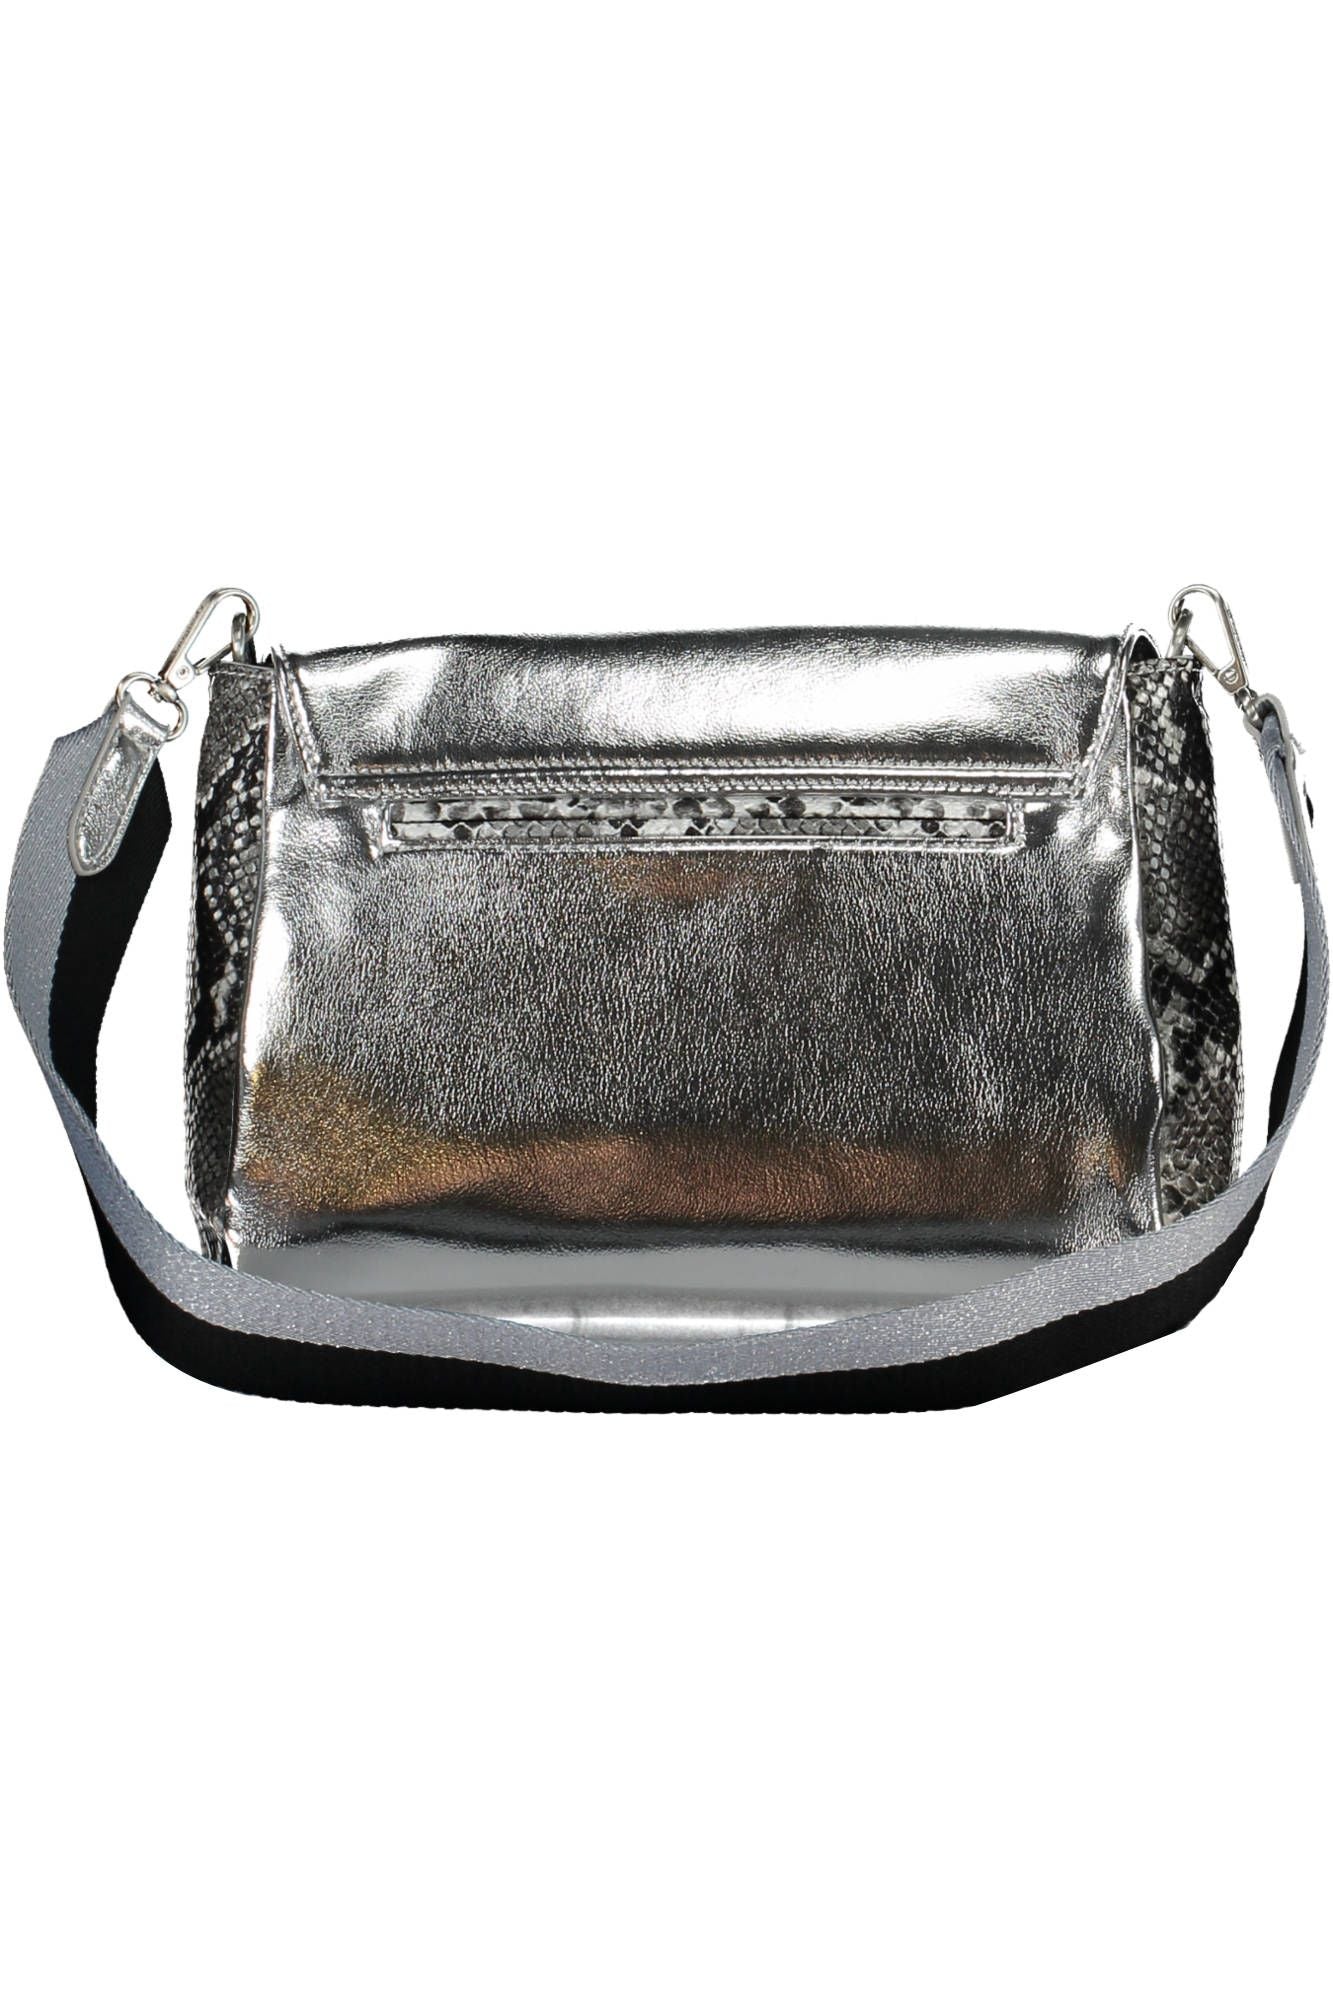 Desigual Silver Polyurethane Handbag - Walbiz.com